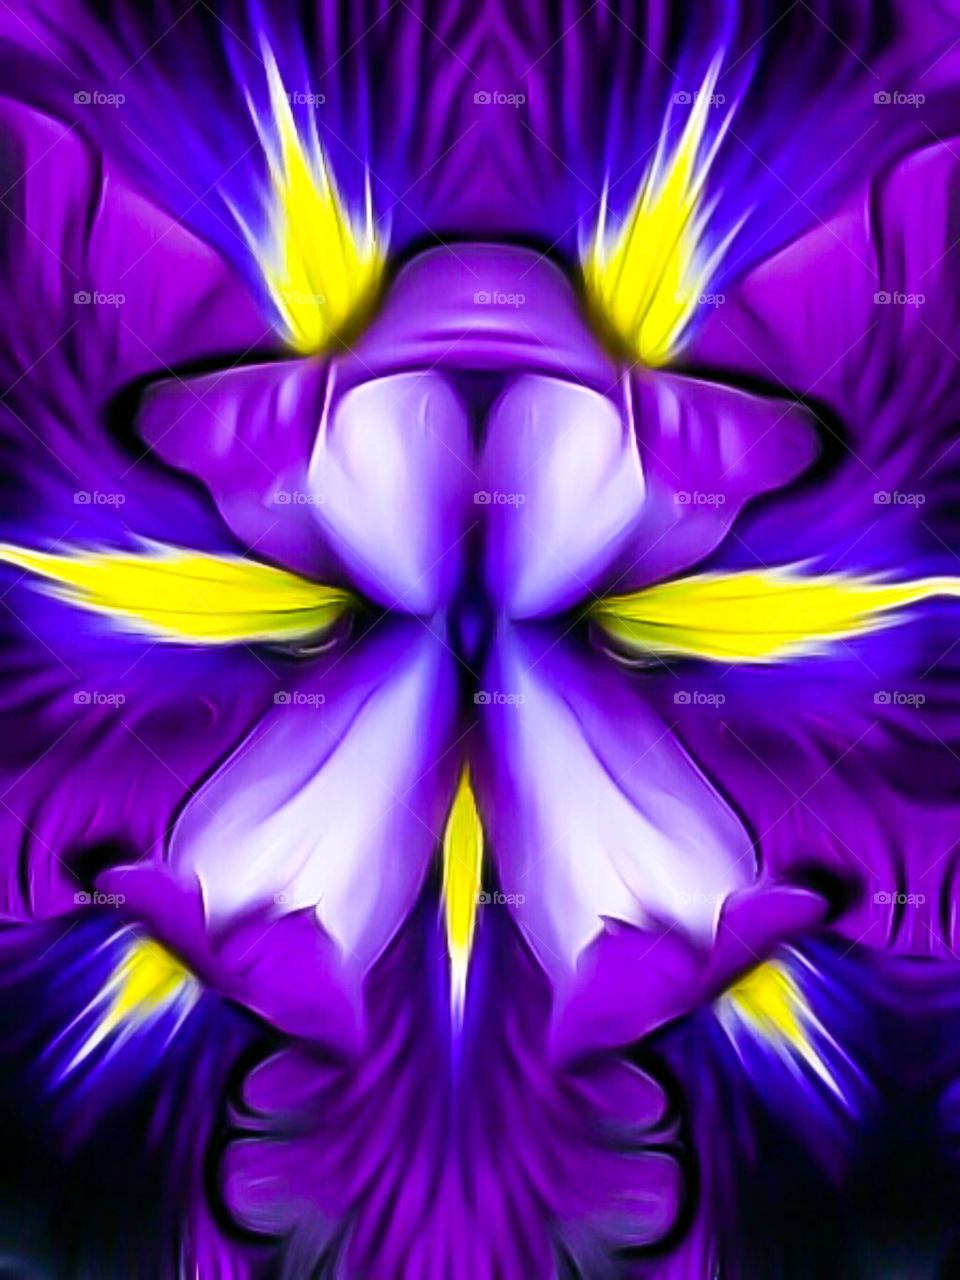 Iris flower purple violet digital abstract by elvio